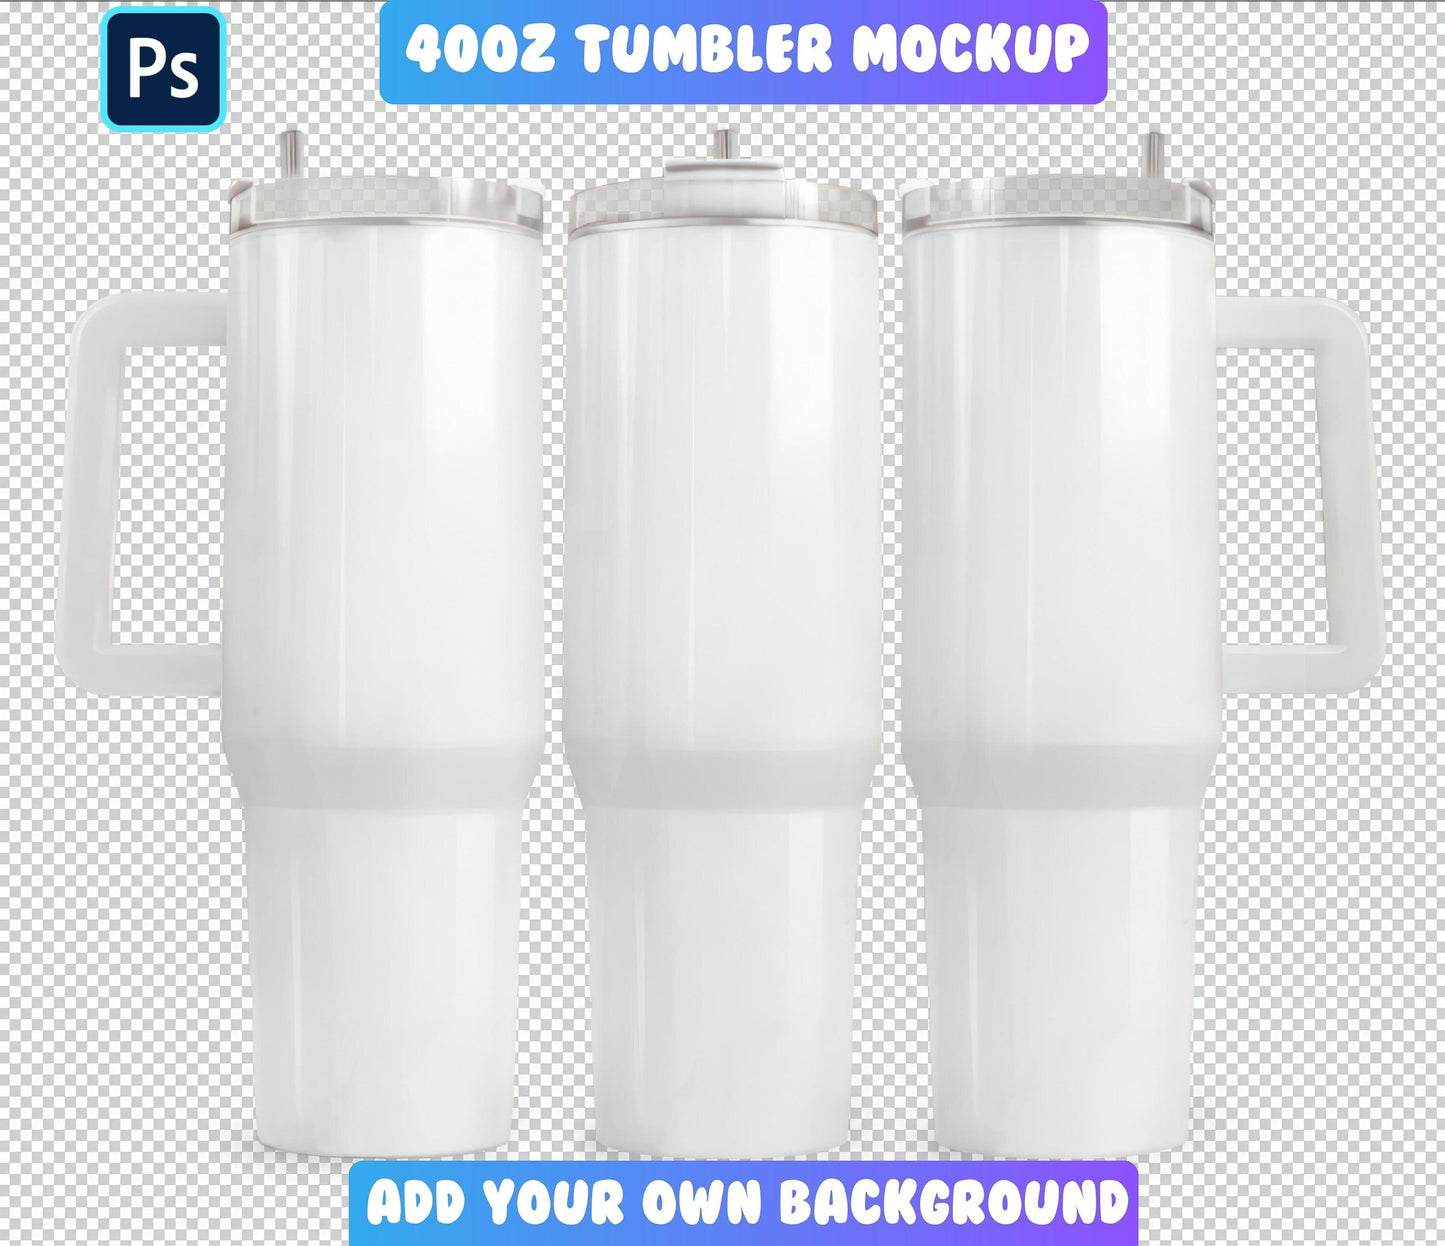 40 oz Tumbler Mockup  Add Your Own Background  40oz Quencher Mockup  PSD Smart Object Mockup  Full Wrap Mockup  4 Backgrounds Included - VartDigitals